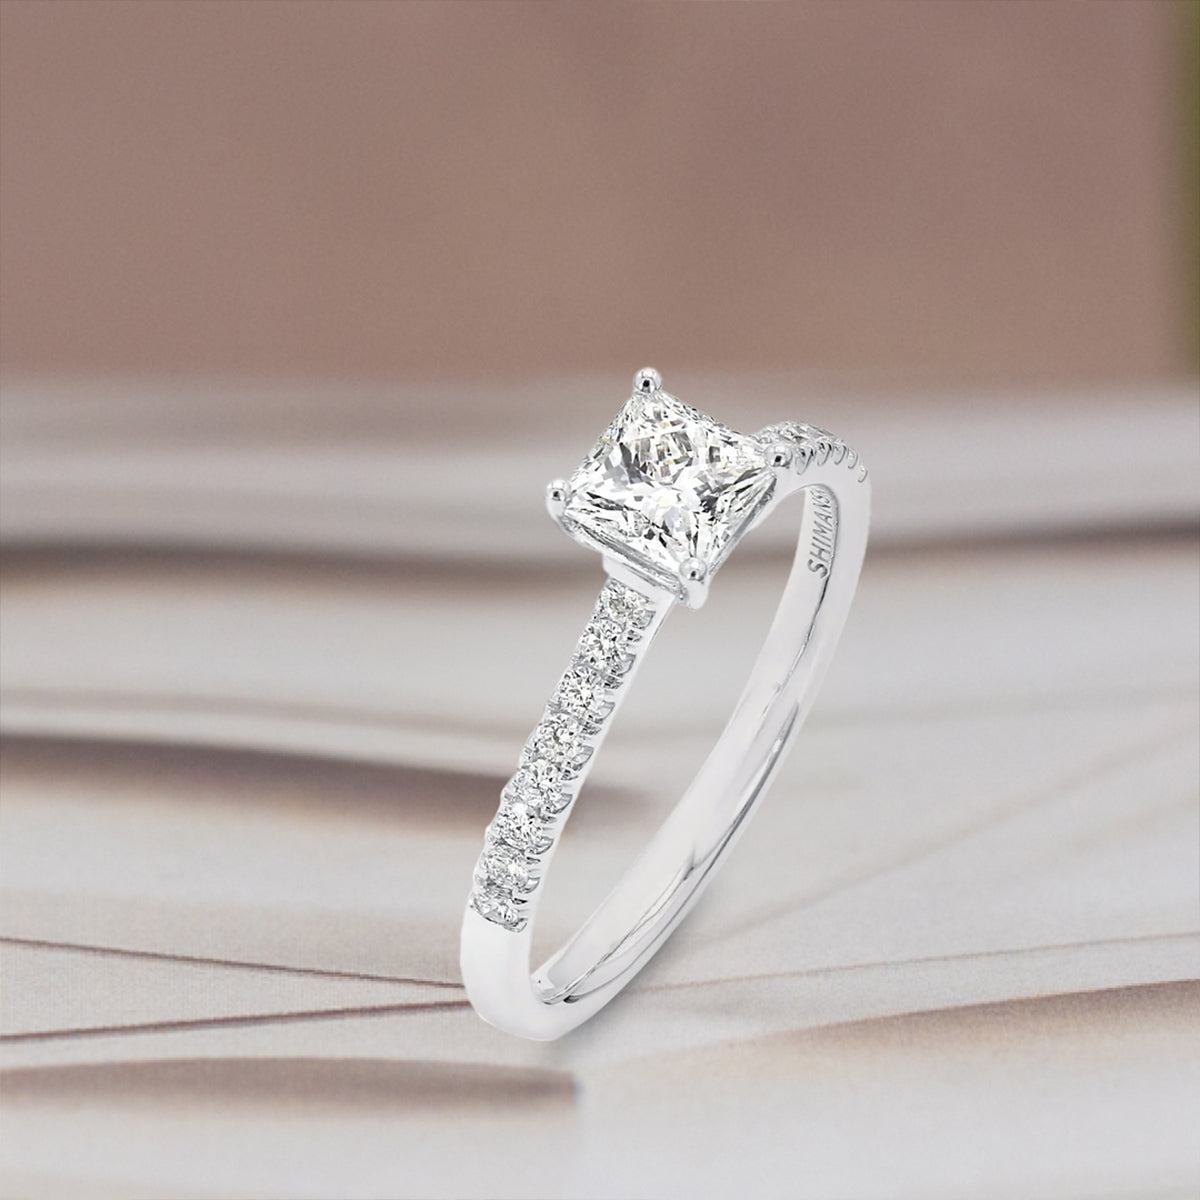 The Shimansky Signature My Girl Diamond Engagement Ring